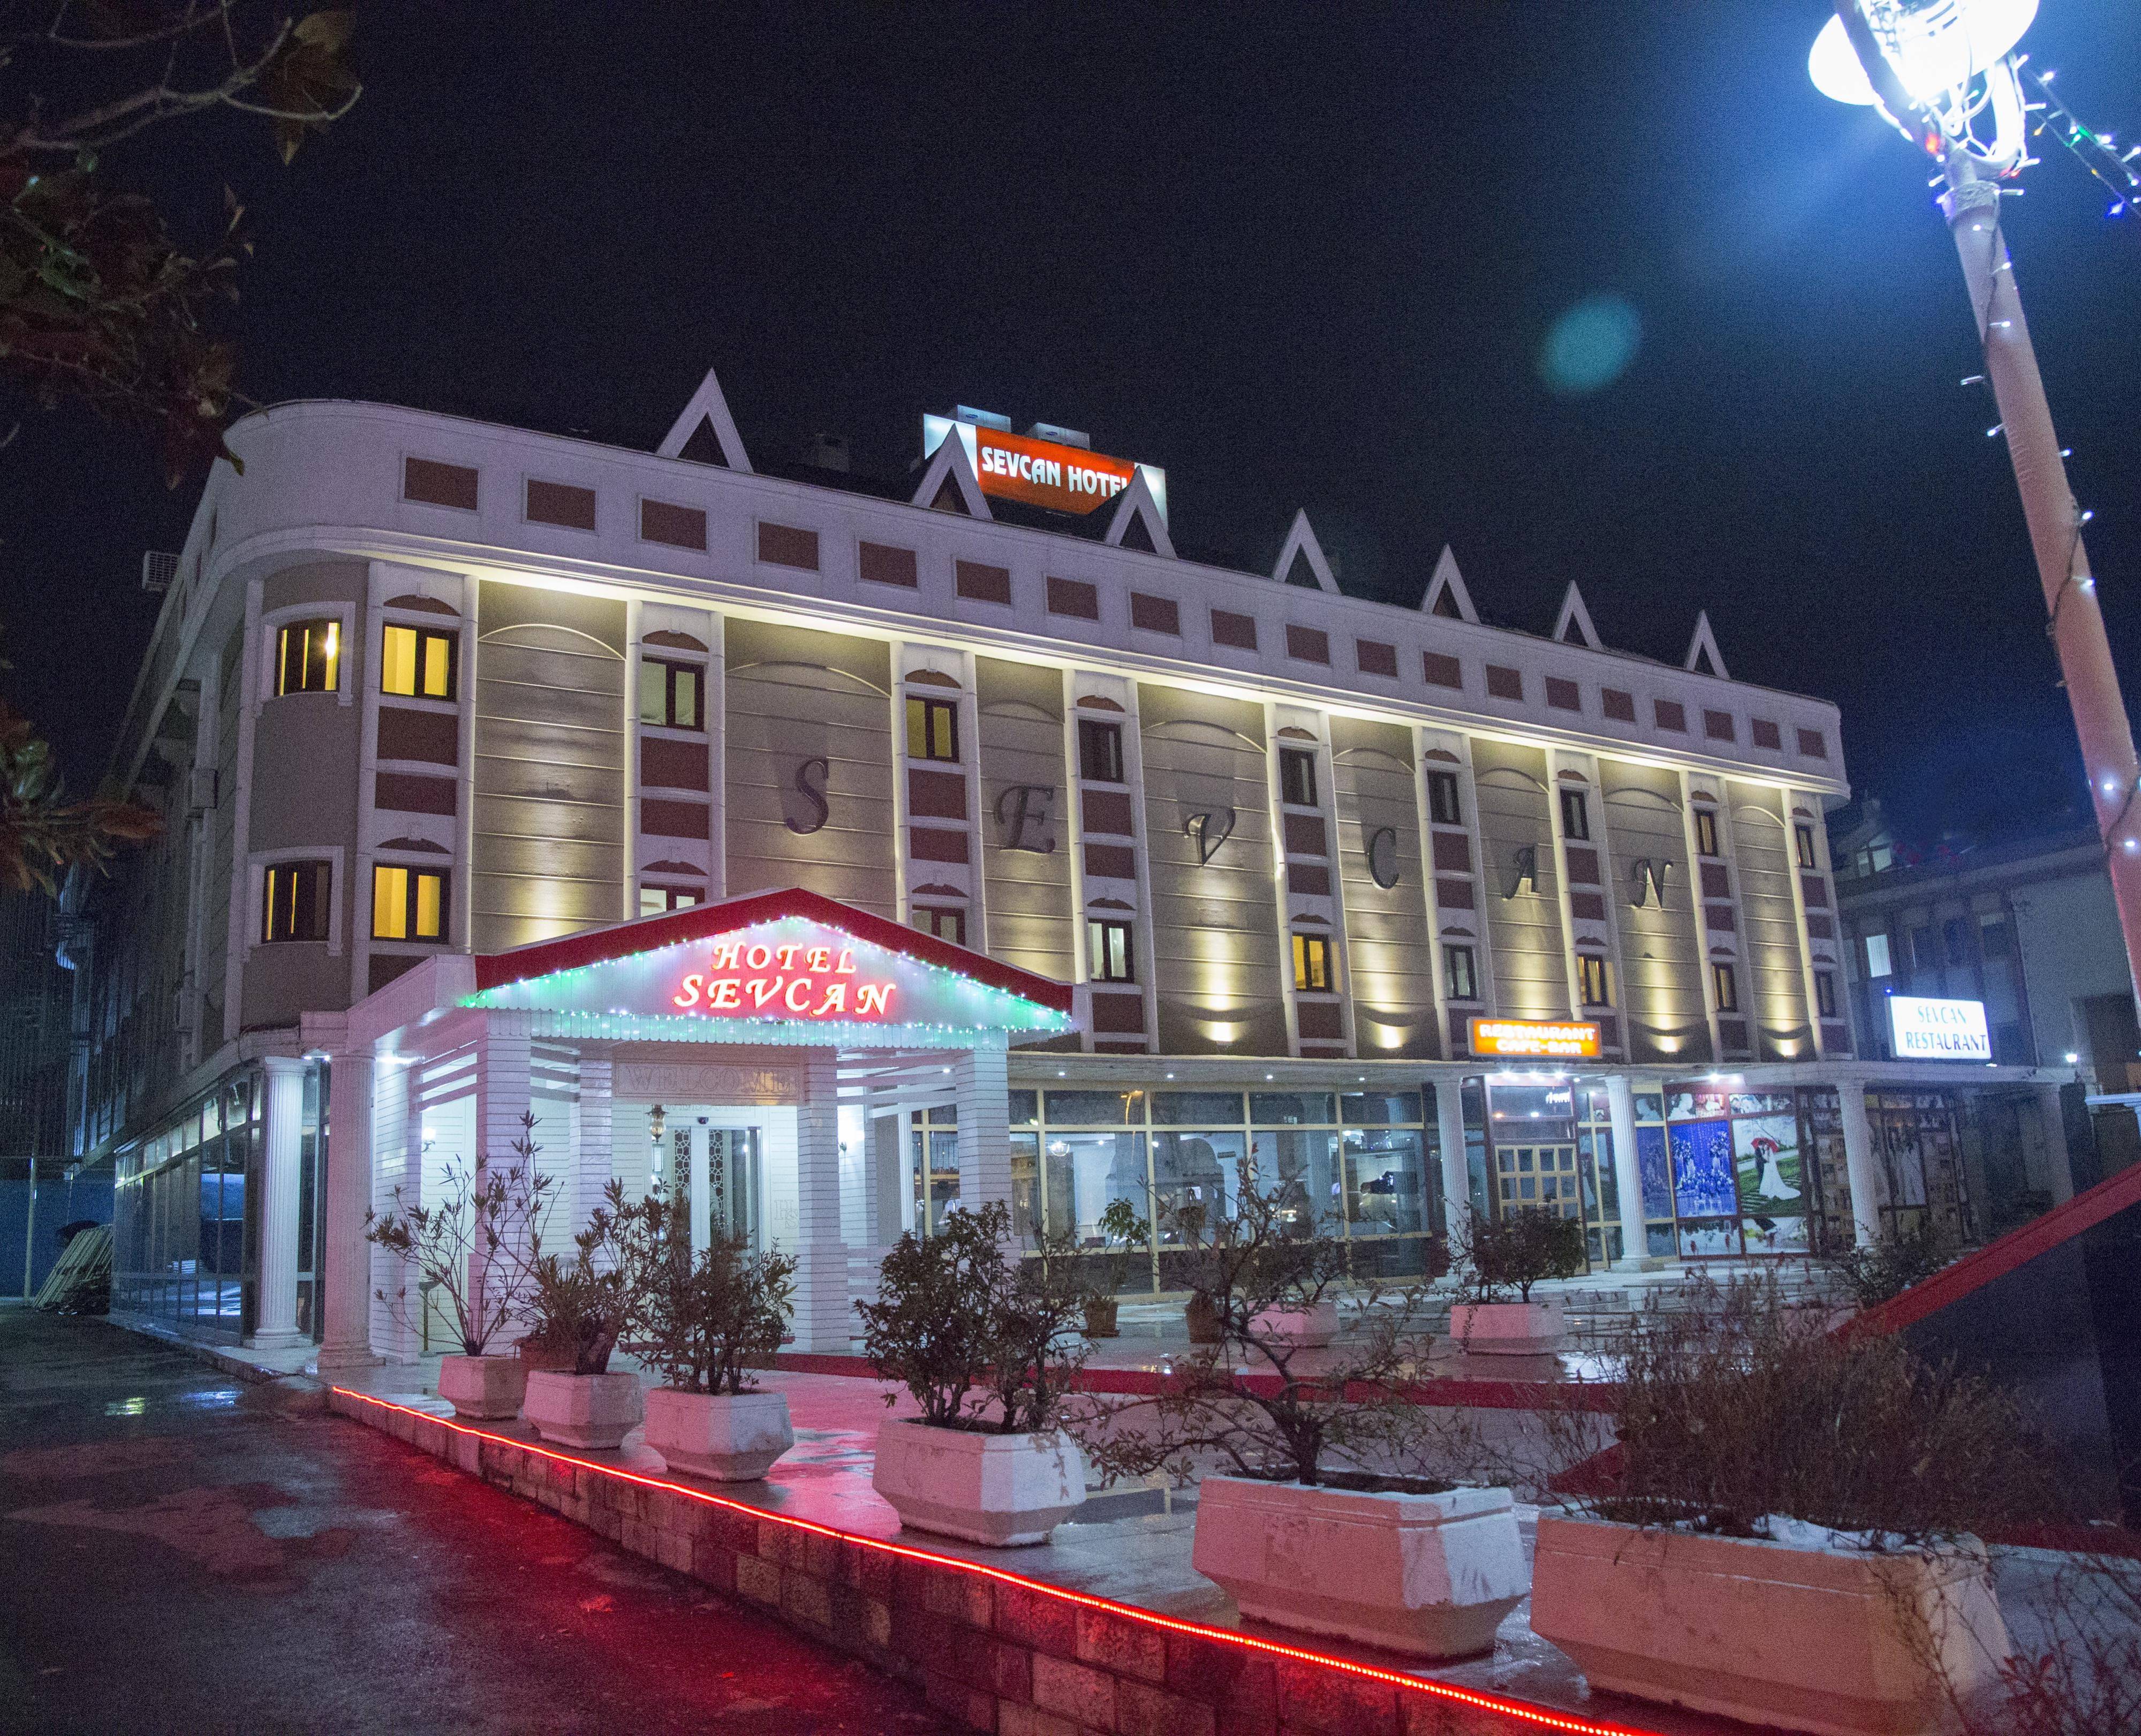 Aksular Hotel